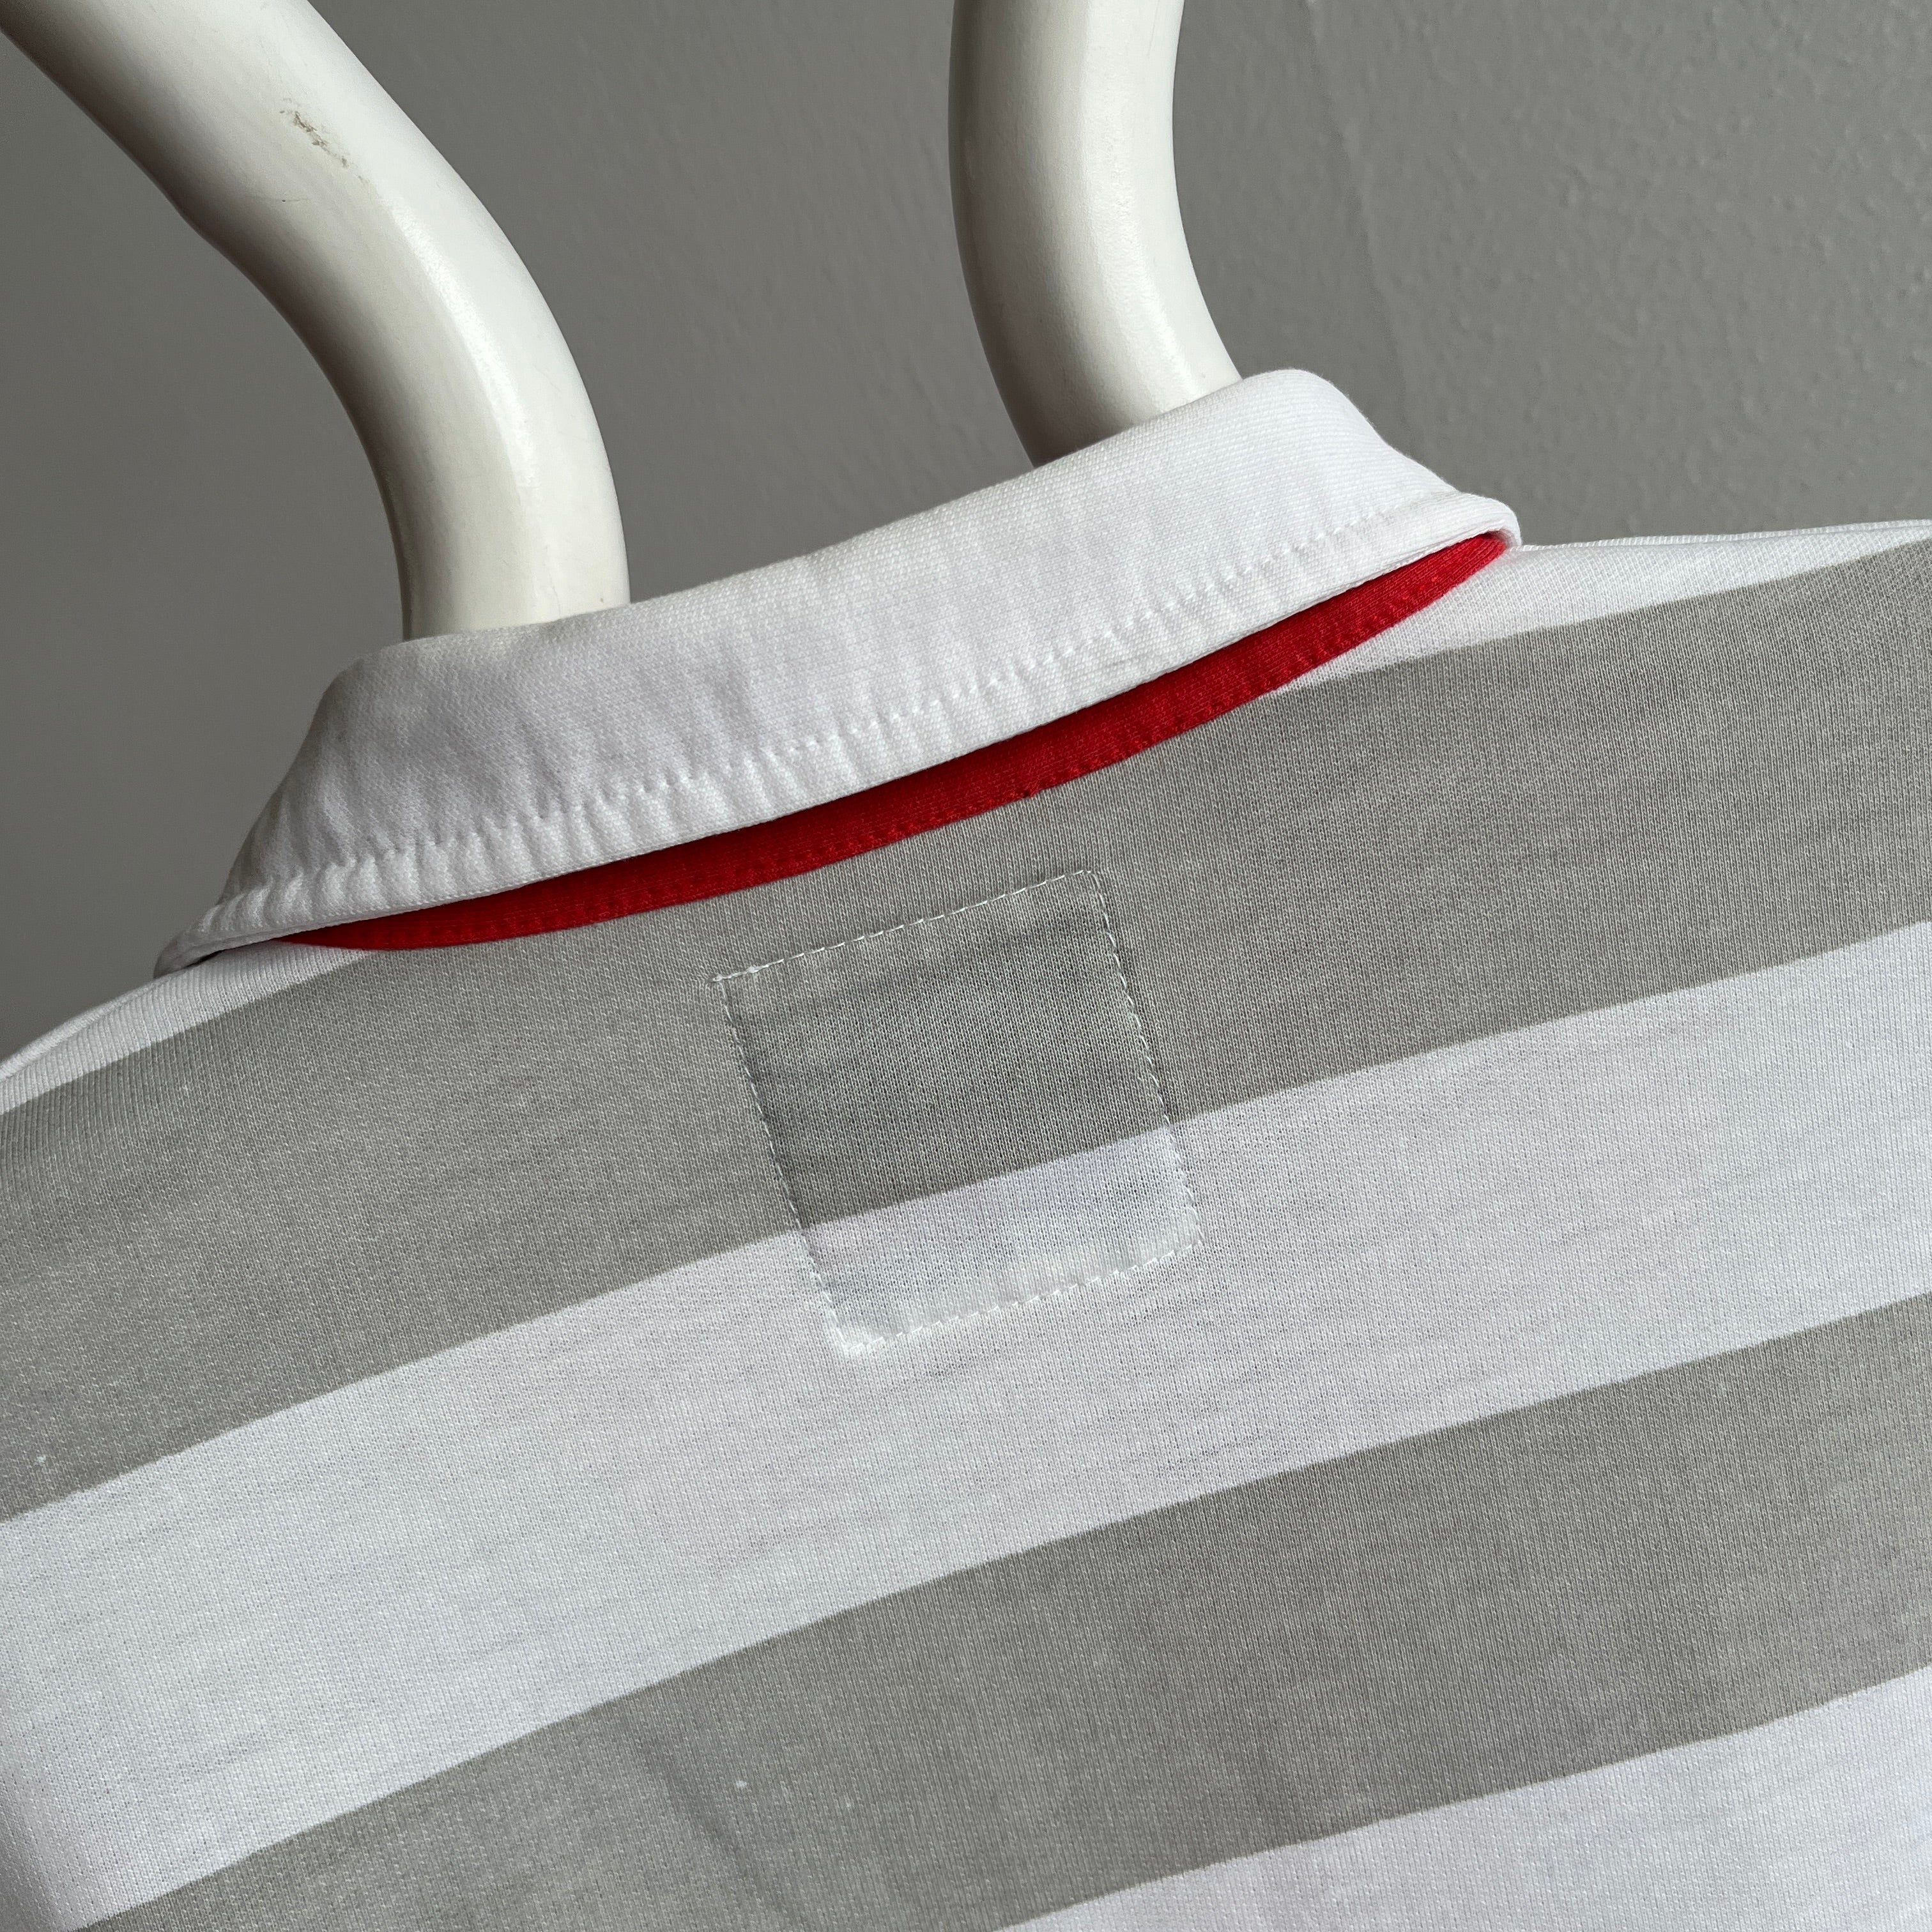 1980/90s Jordache Striped Polo Short Sleeve Sweatshirt/Shirt